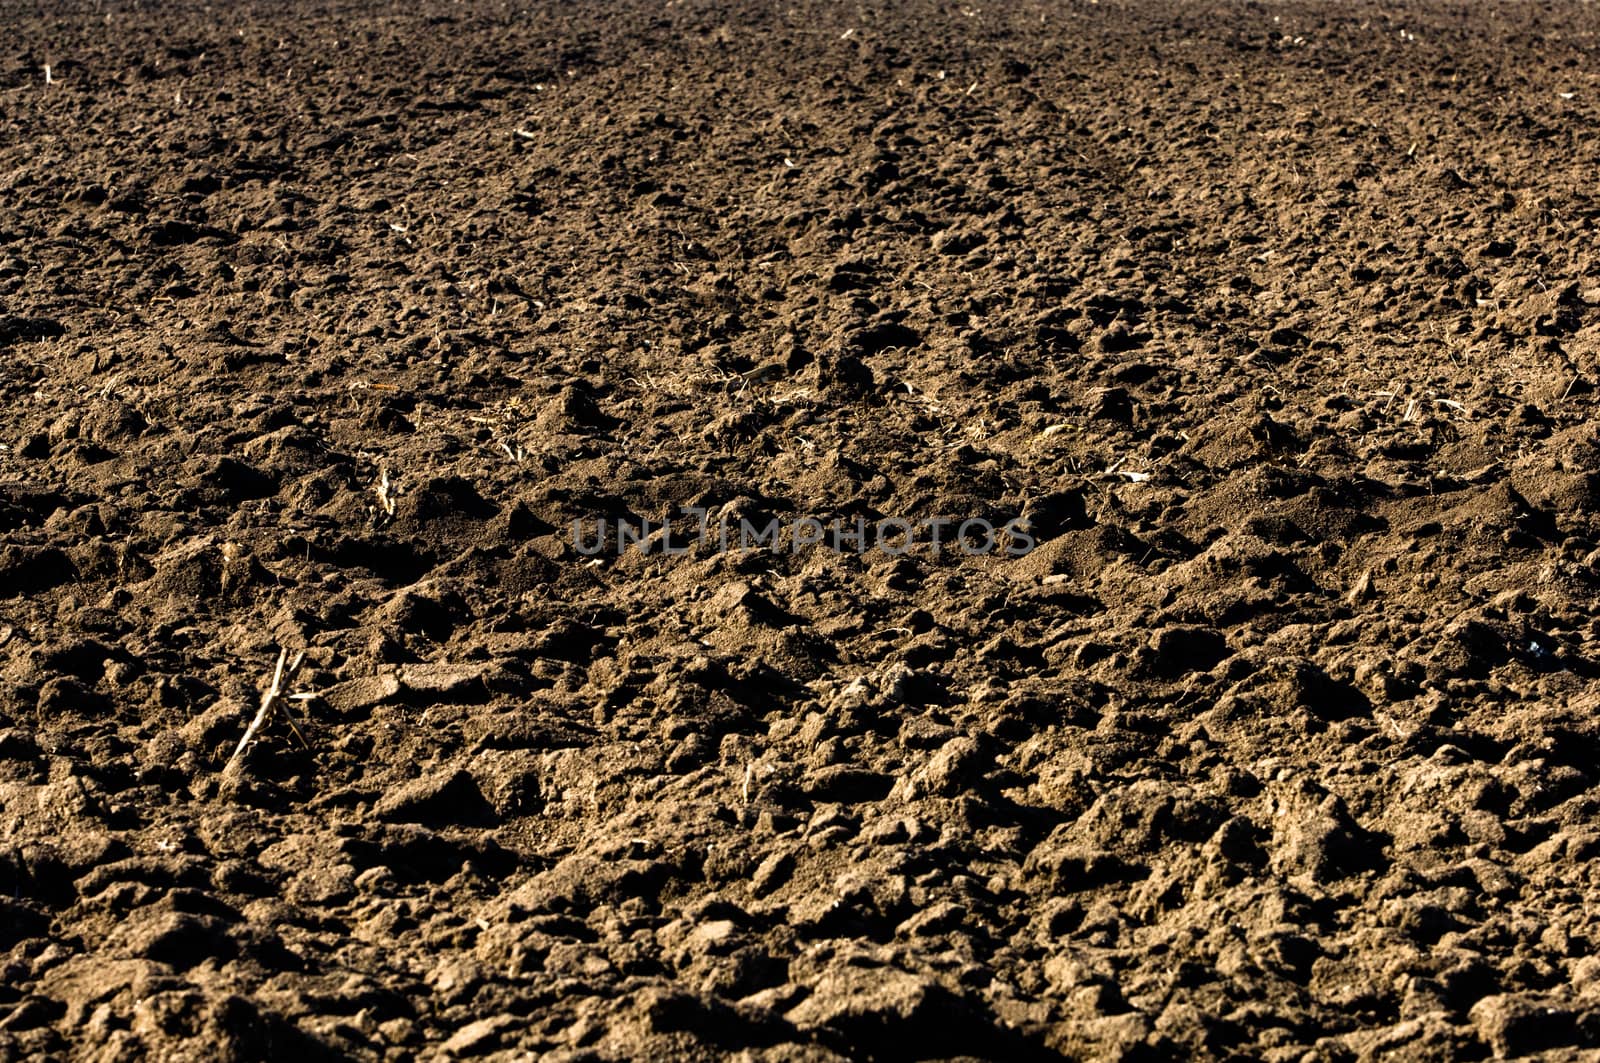 Plowed black soil in agricultural field 